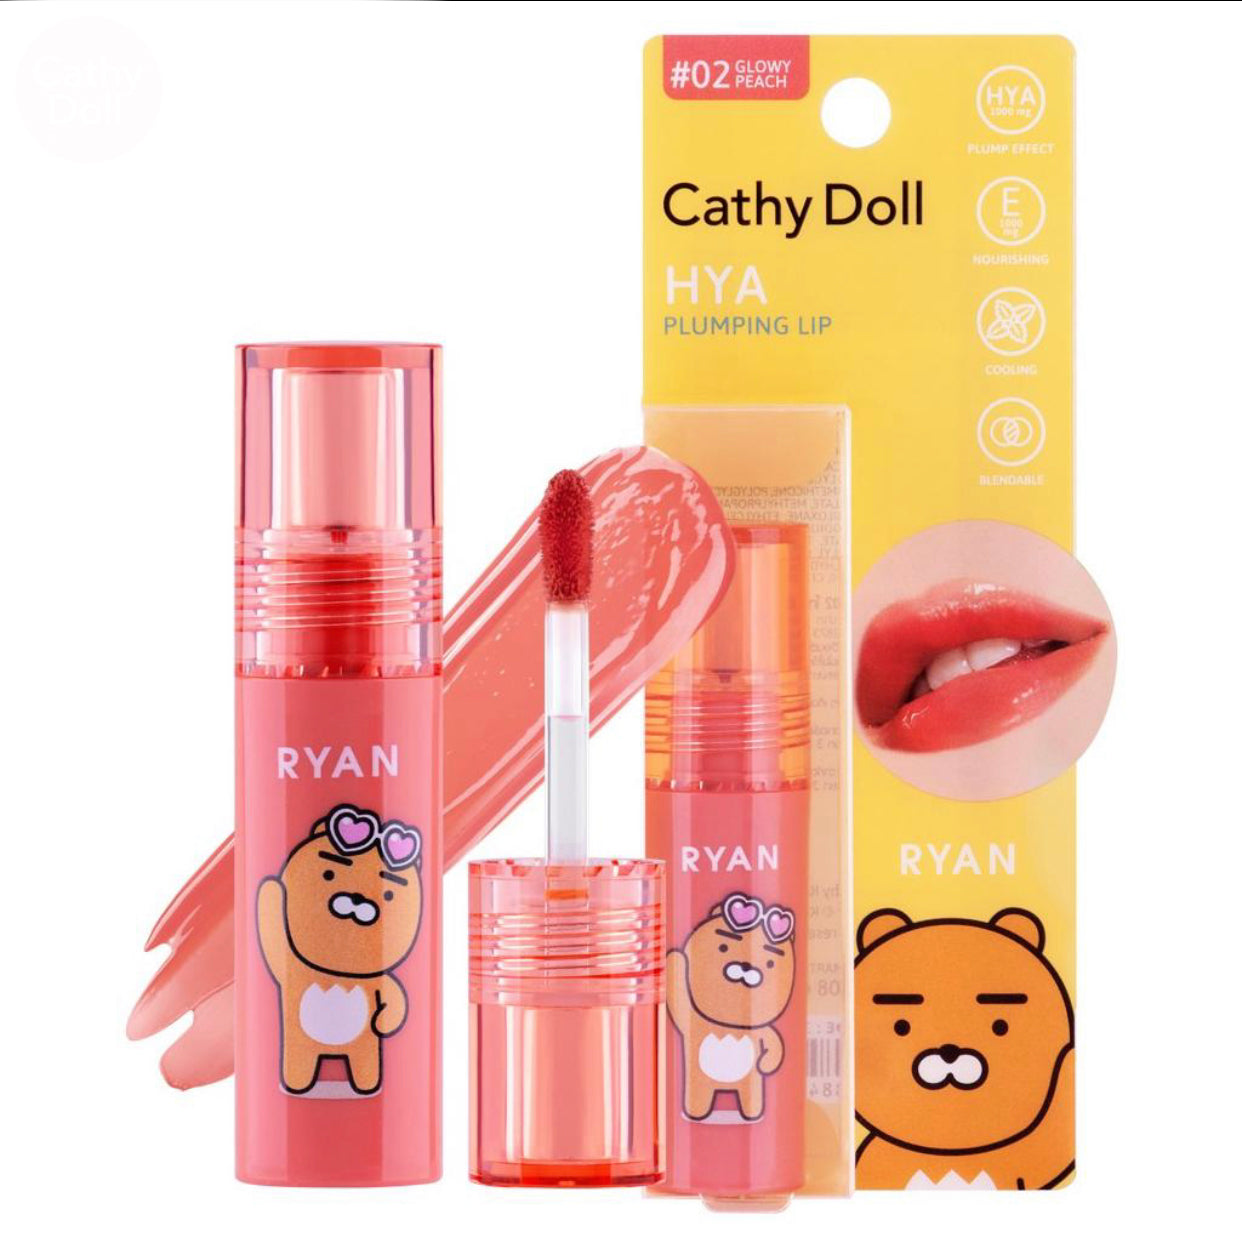 Cathy Doll Kakao Friends Hya Plumping Lip #02